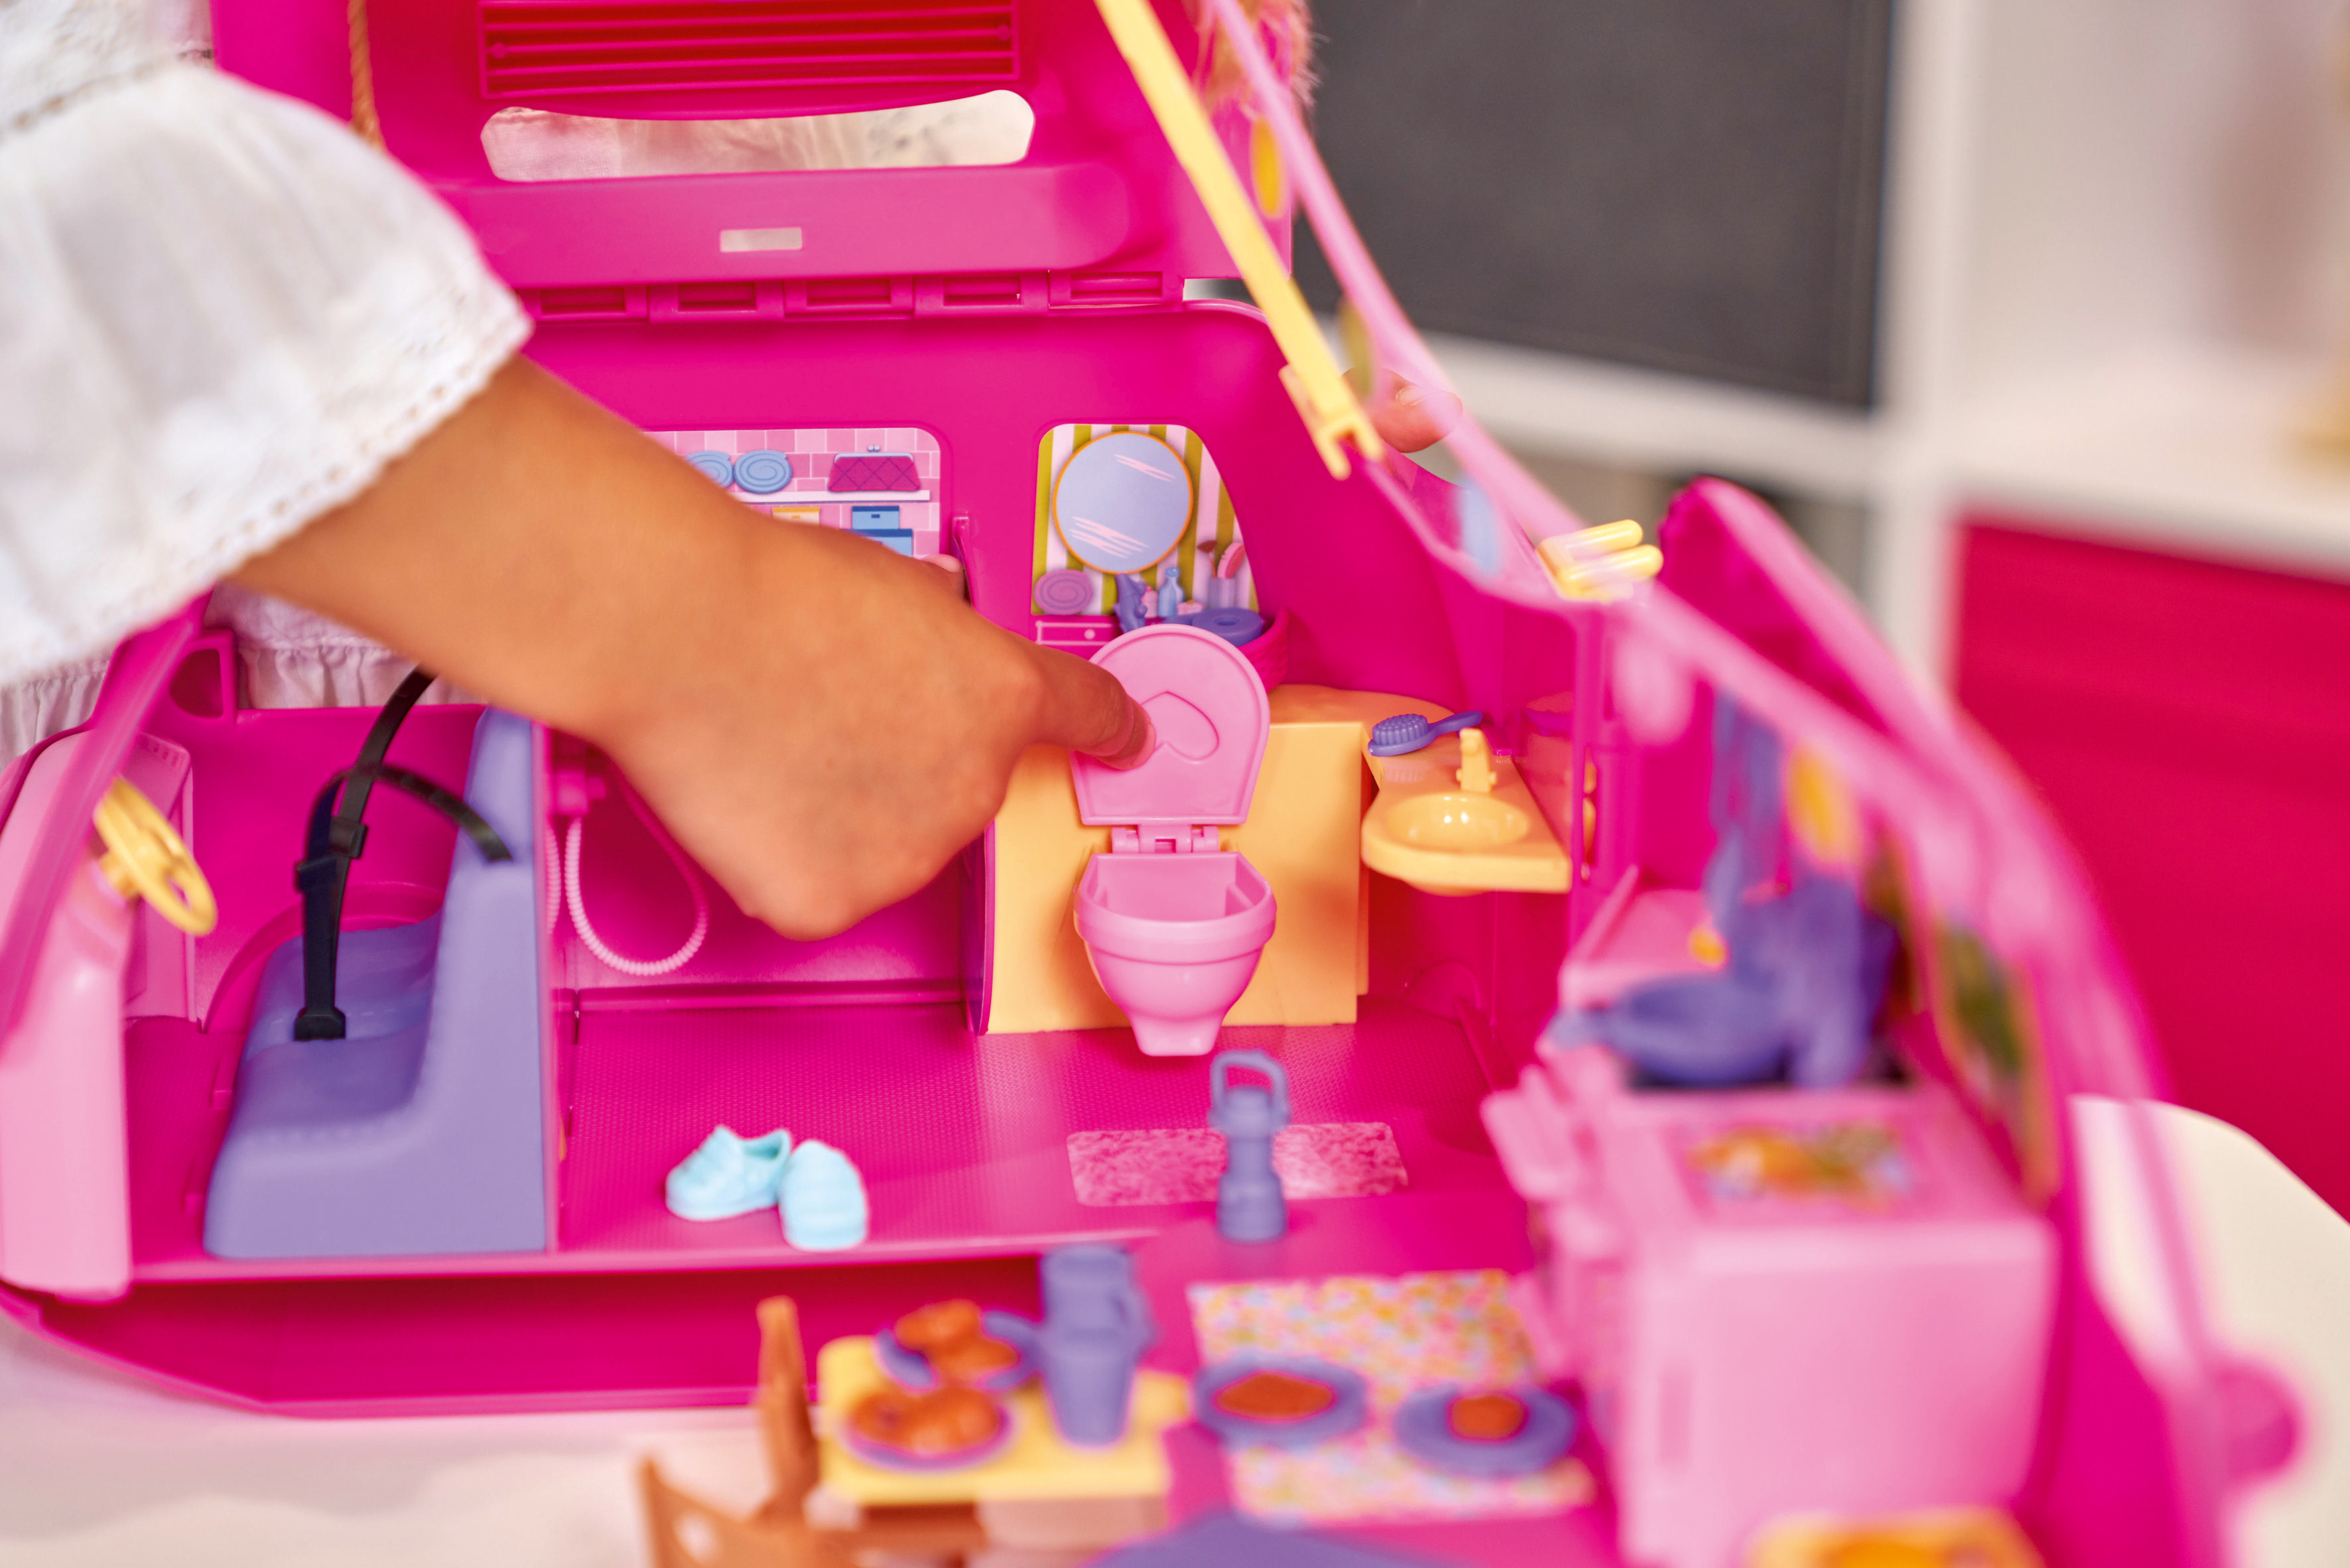 EL SIMBA Mehrfarbig Wohnmobil Ferienspaß TOYS Spielzeugset